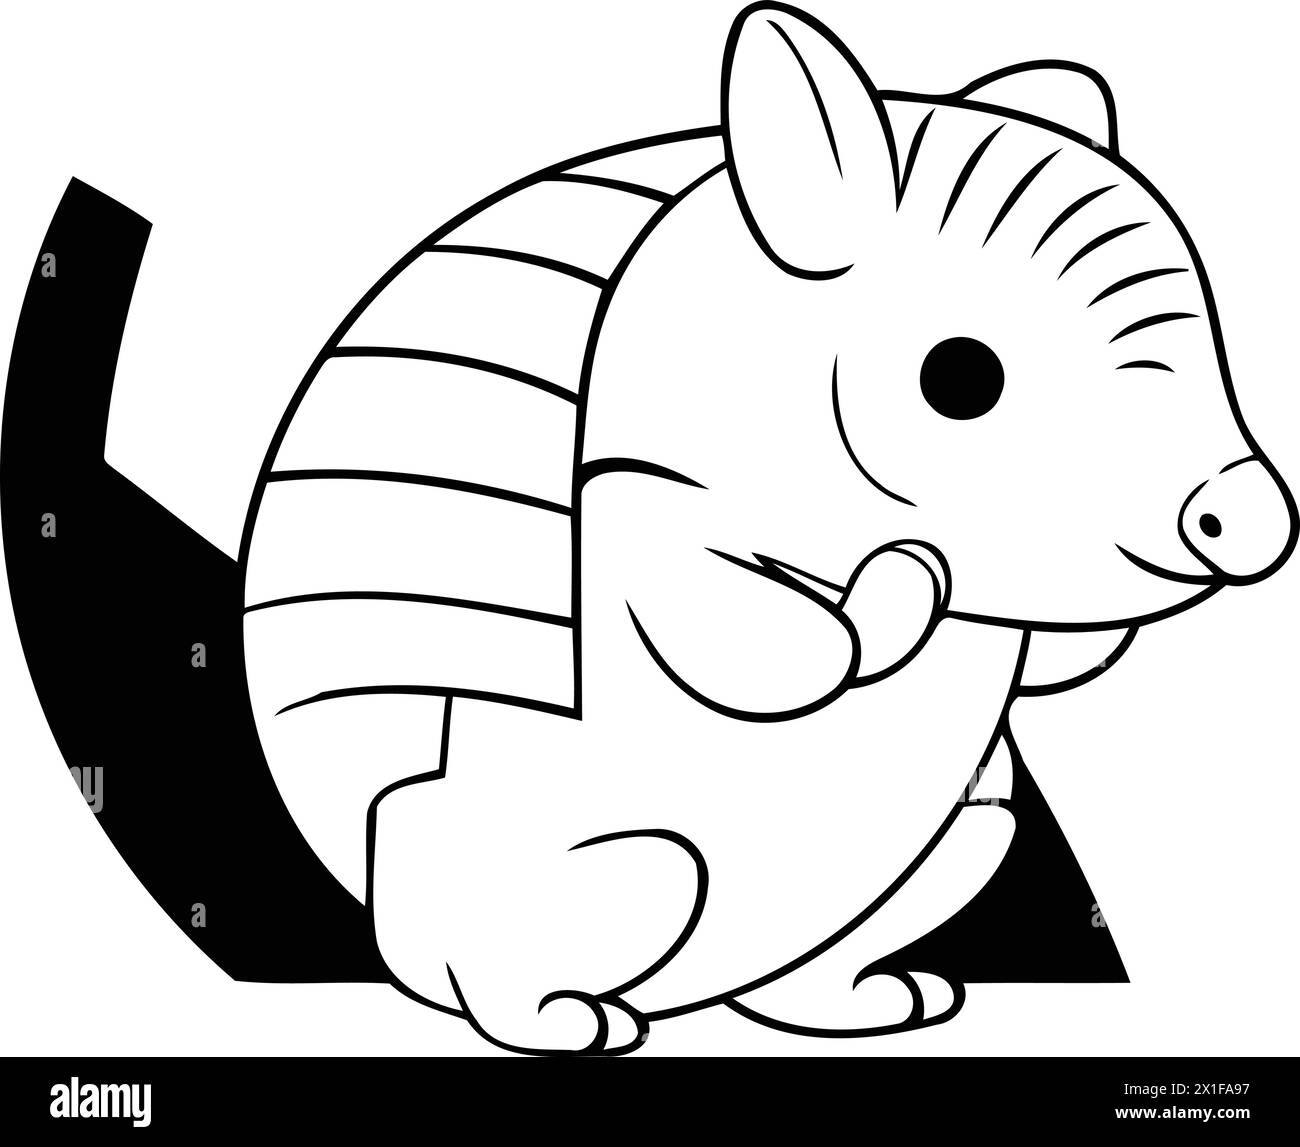 Mignon zèbre de dessin animé. Illustration vectorielle d'un animal mignon. Illustration de Vecteur